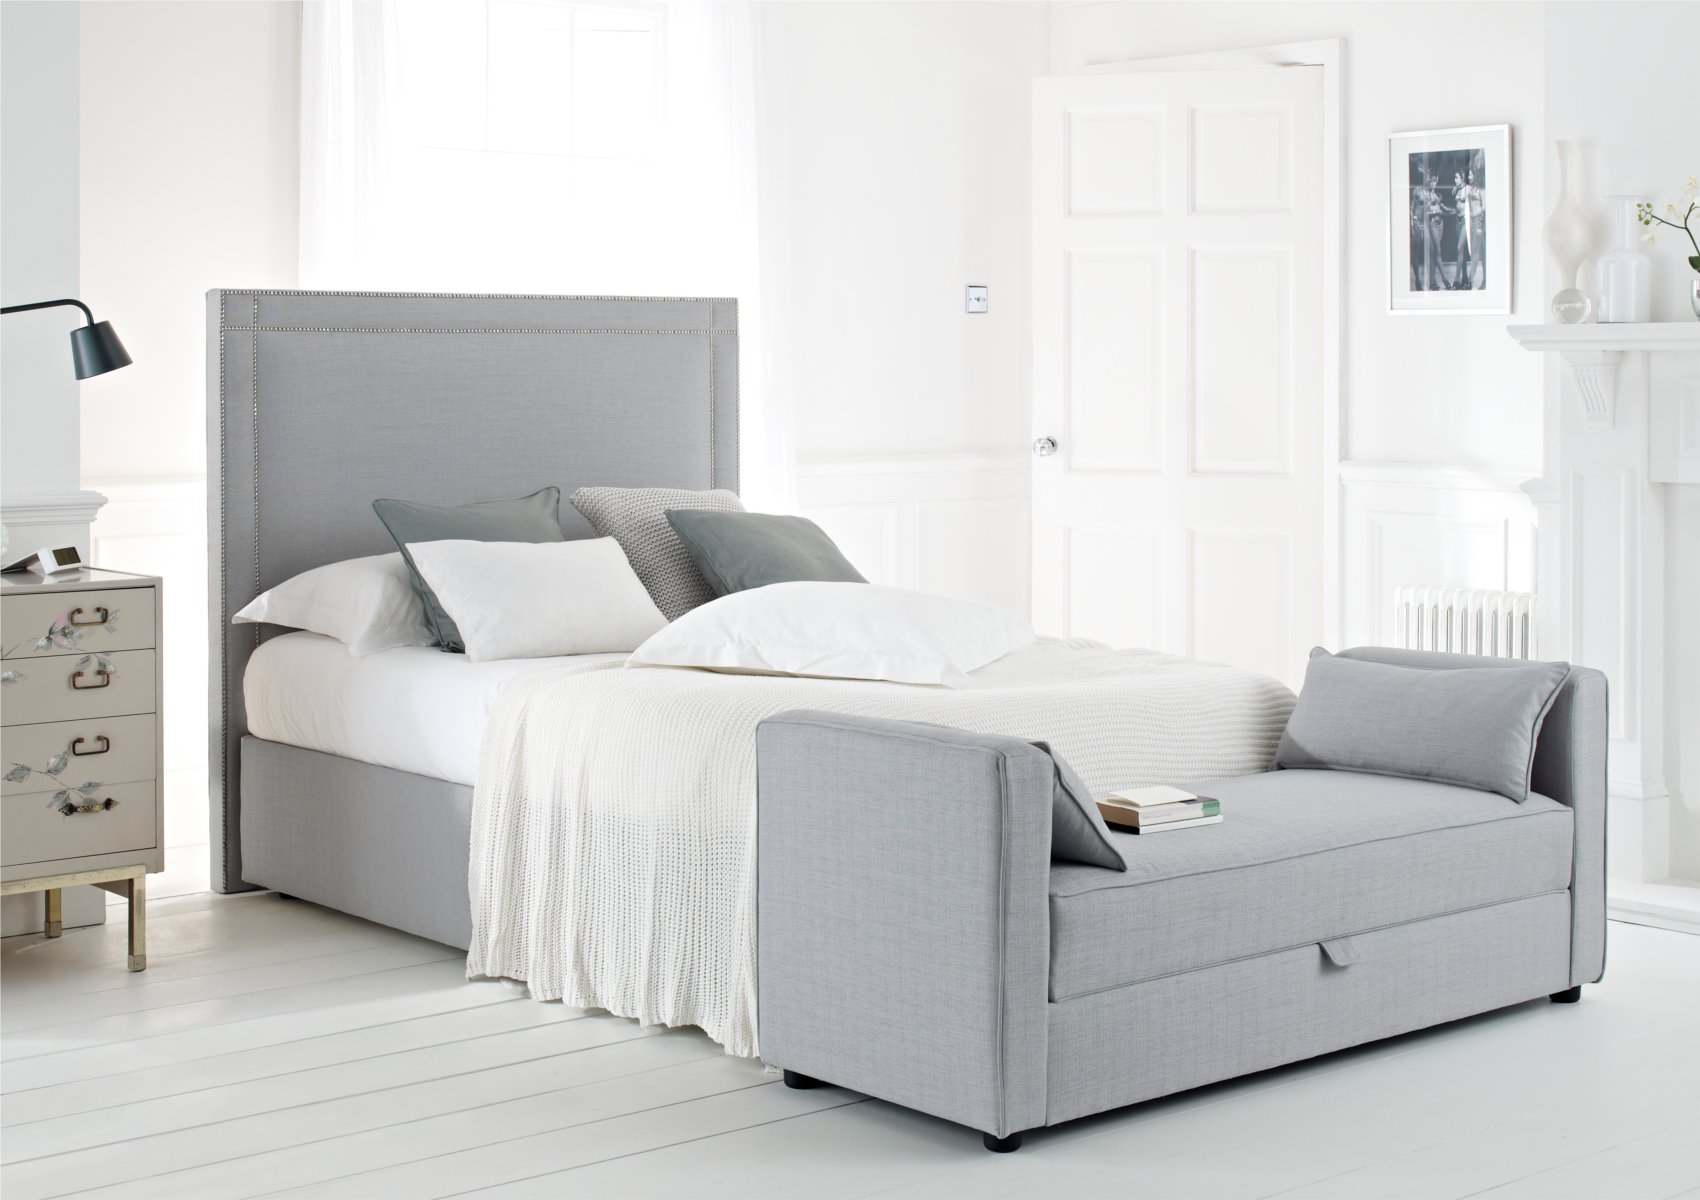 View Buckingham Platinum Upholstered Double Divan Bed Time4Sleep information